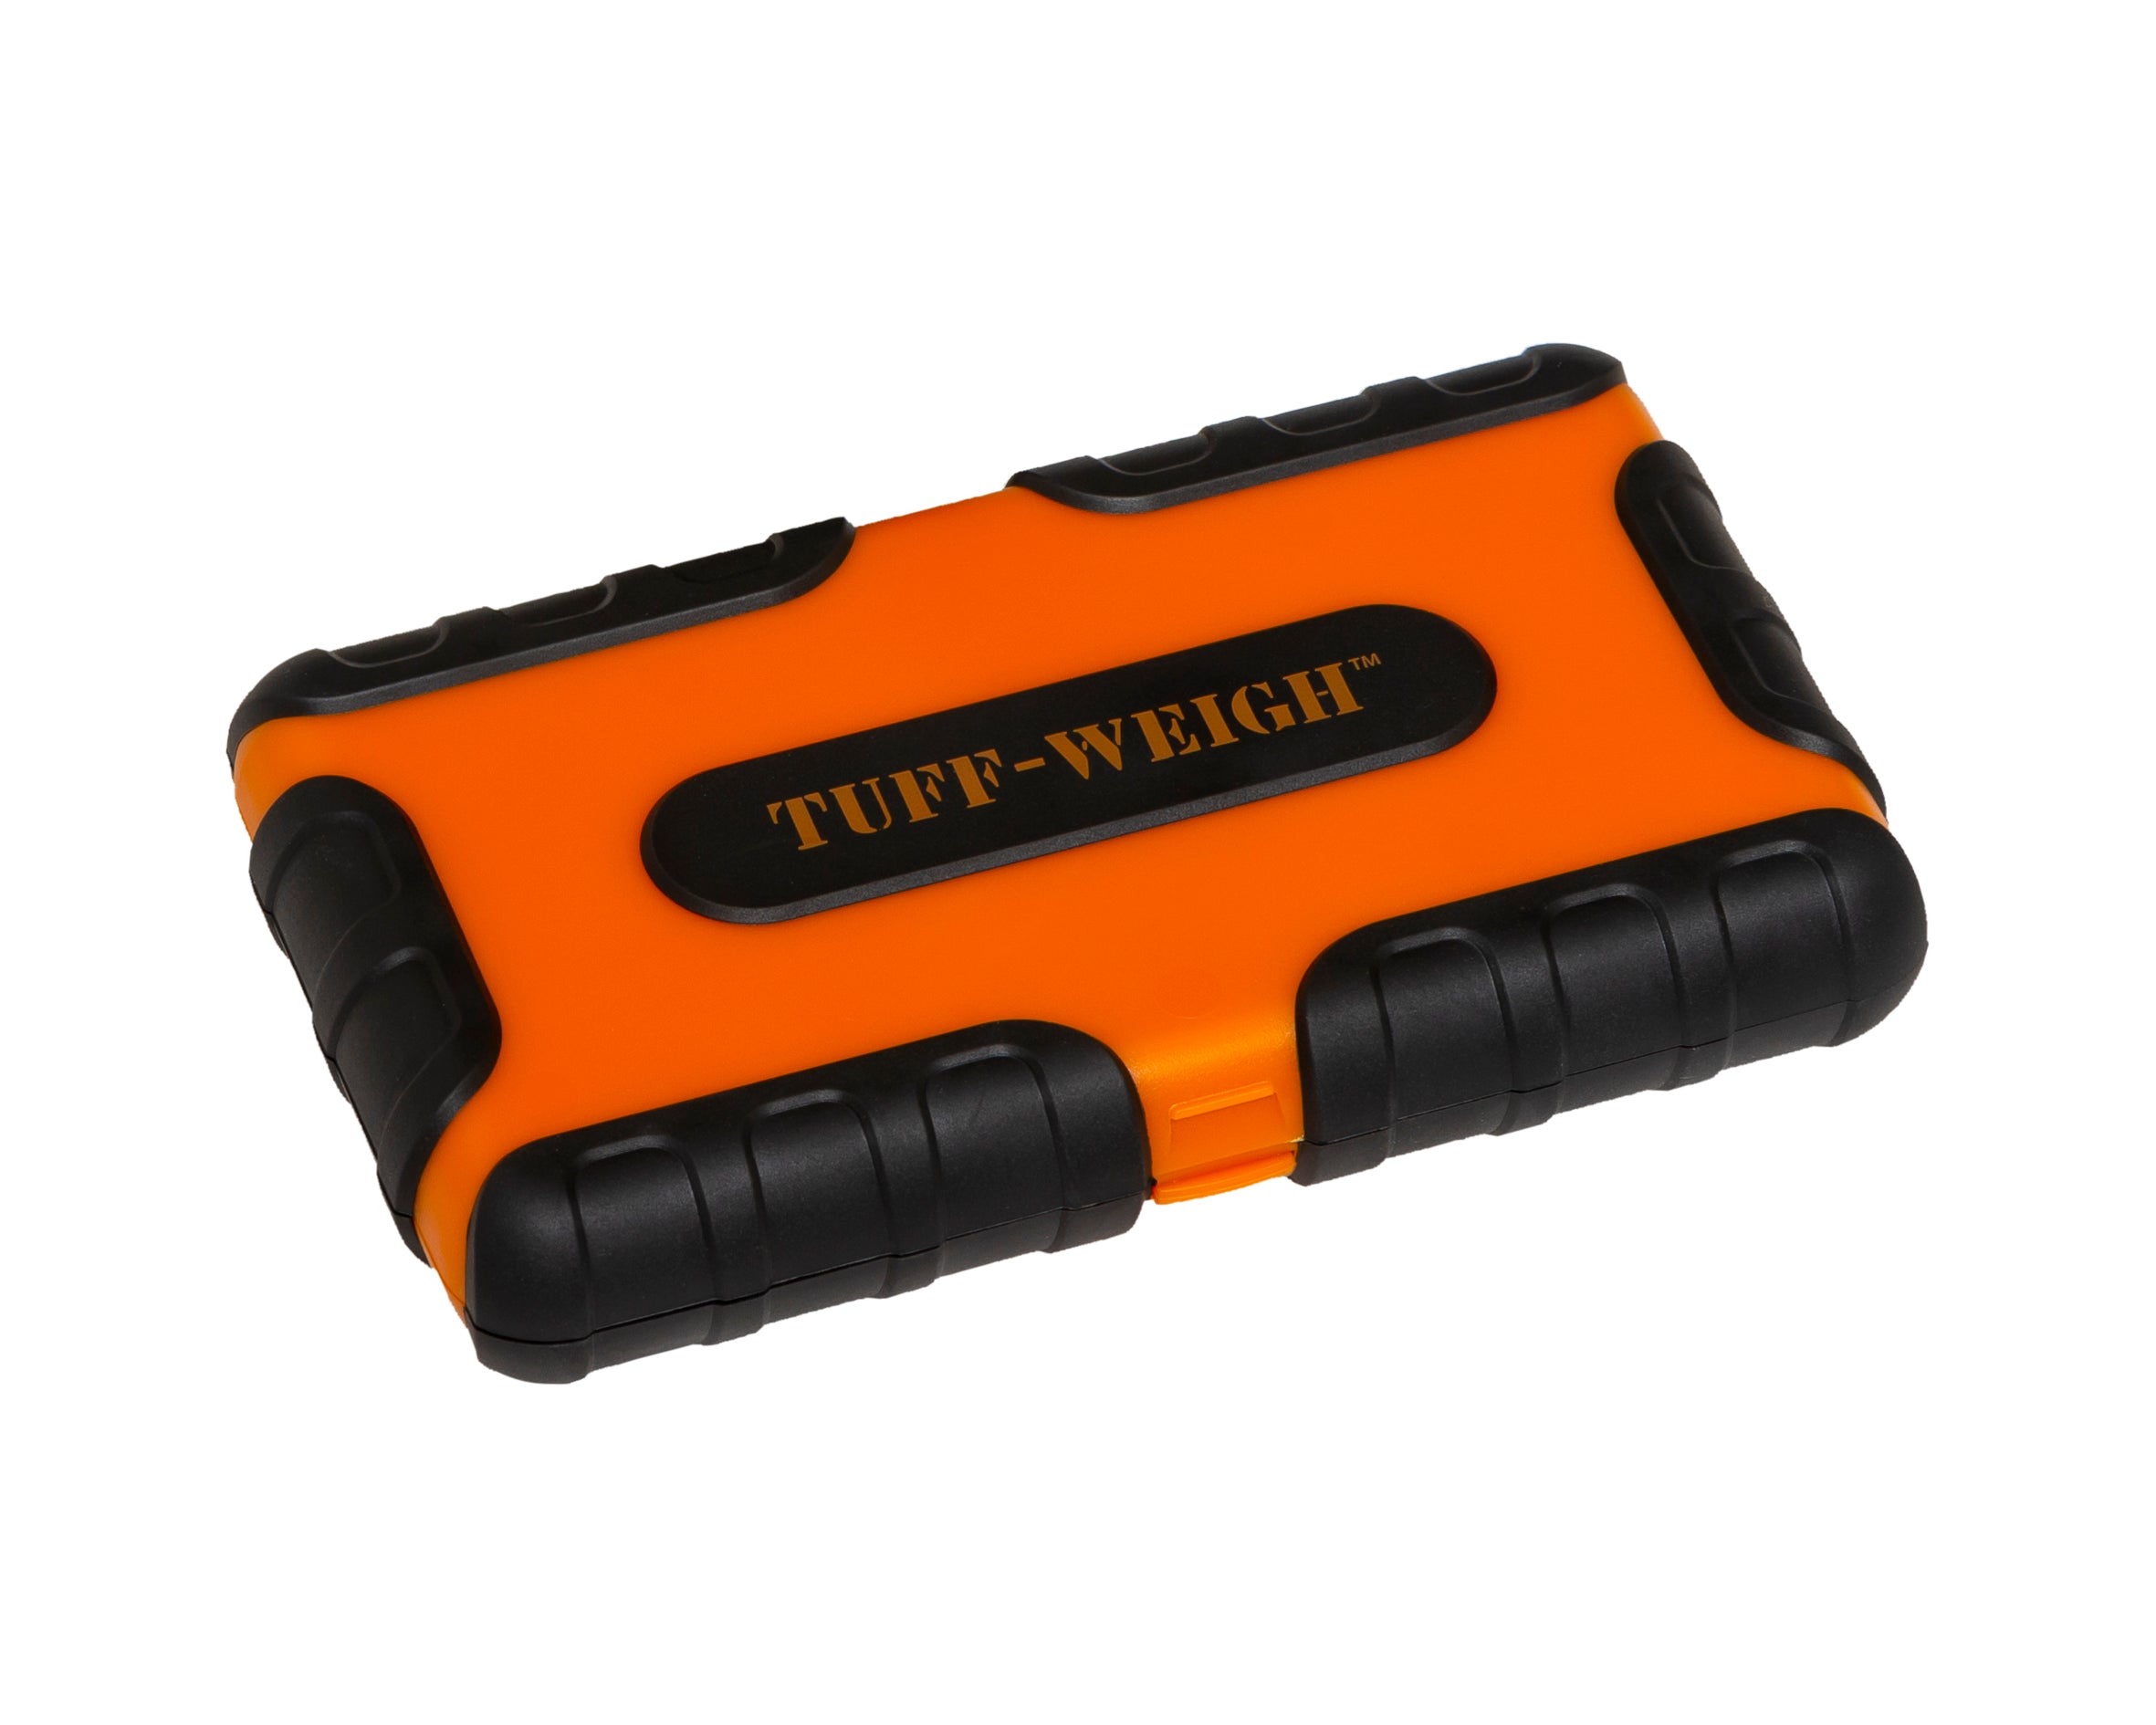 TUF-1000-OR On Balance Tuff-Weigh Pocket Scale - Orange 1000g x 0.1g